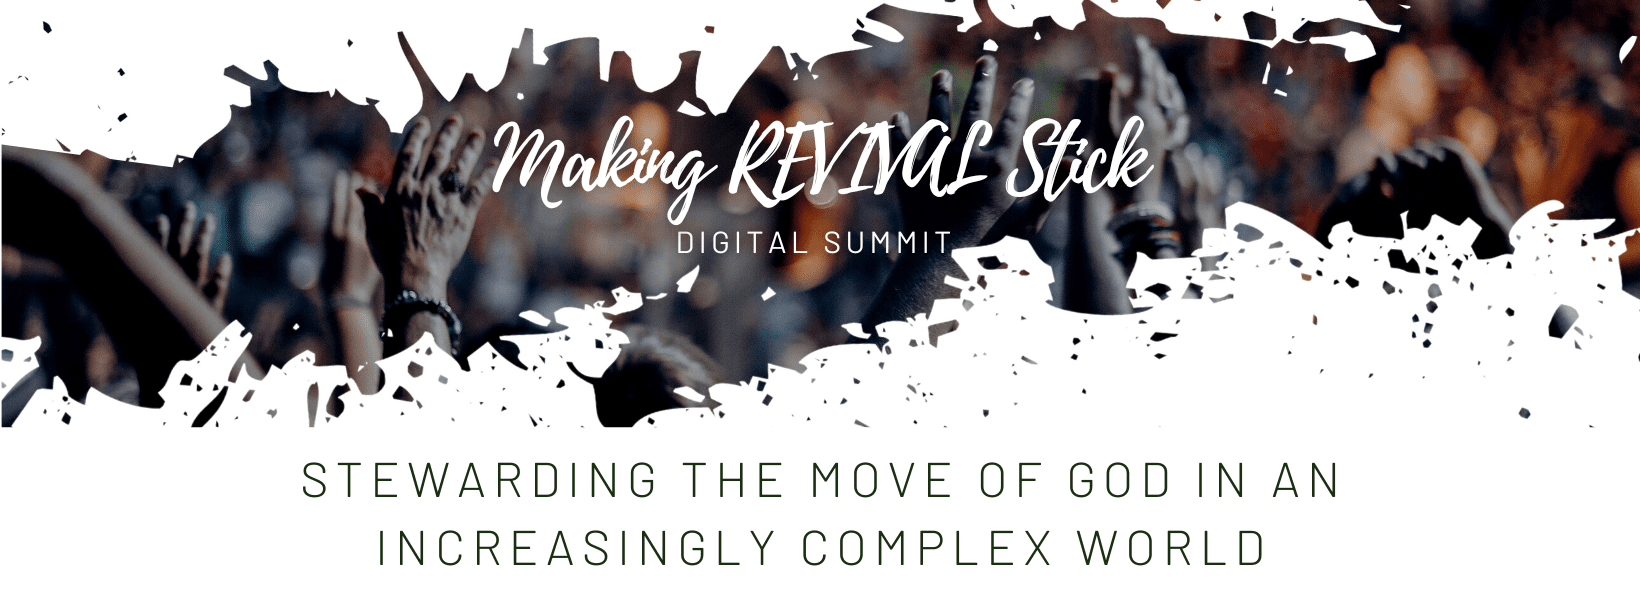 Making Revival Stick Digital Summit eCourse